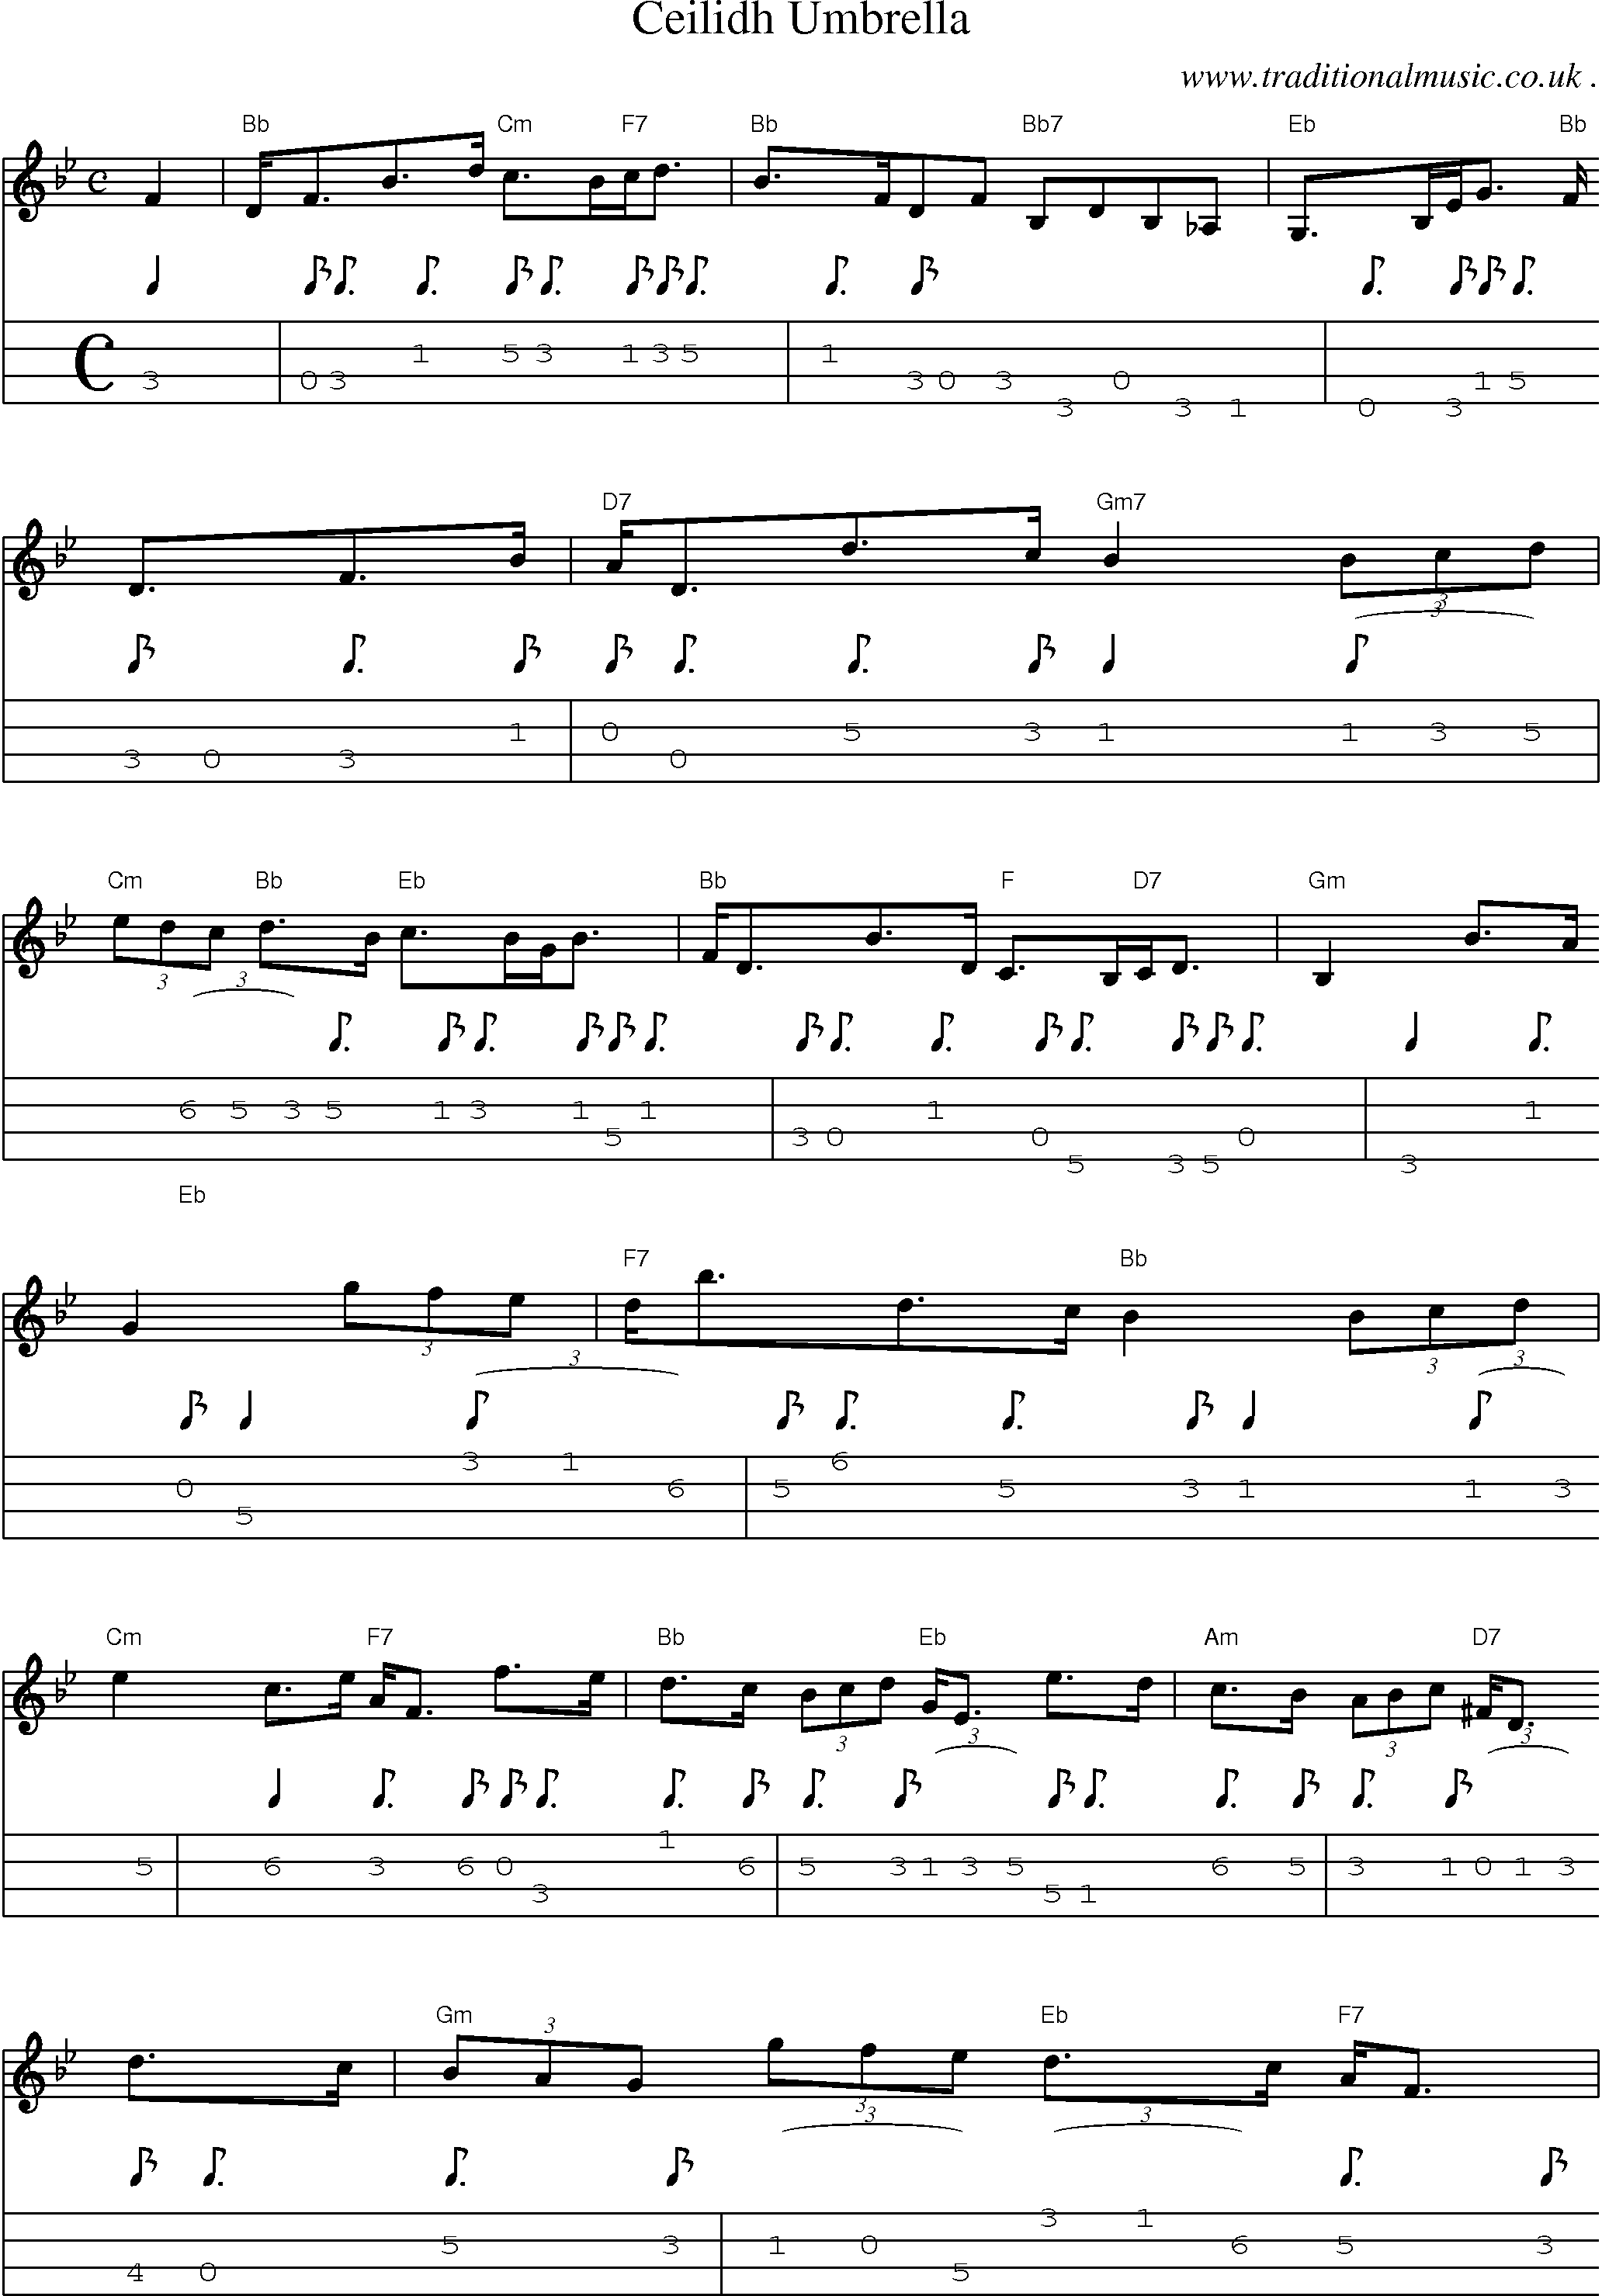 Sheet-music  score, Chords and Mandolin Tabs for Ceilidh Umbrella